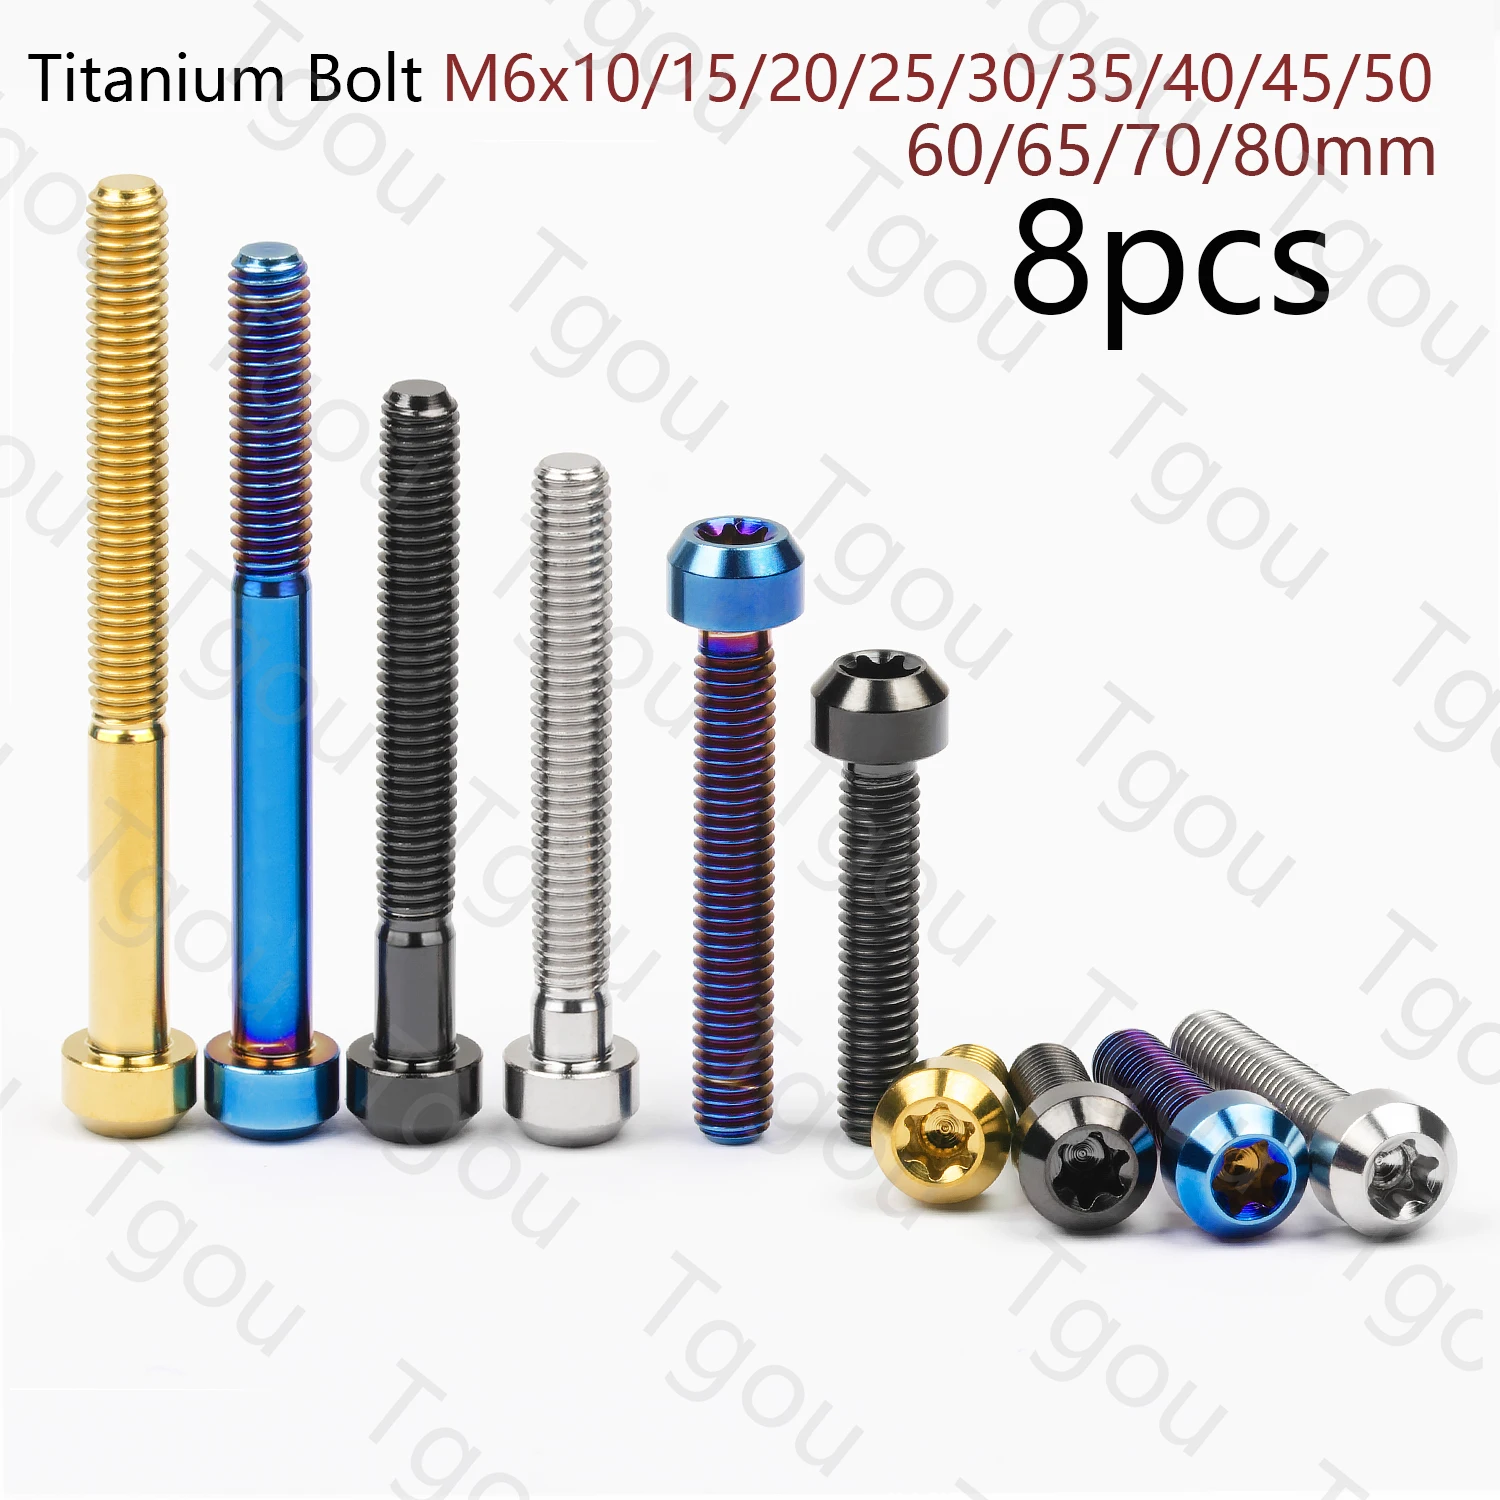 

Tgou Titanium Bolt M6x10/15/20/25/30/35/40/45/50/60/65/70/80mm Torx T30 Head Screws for Bicycle 8pcs